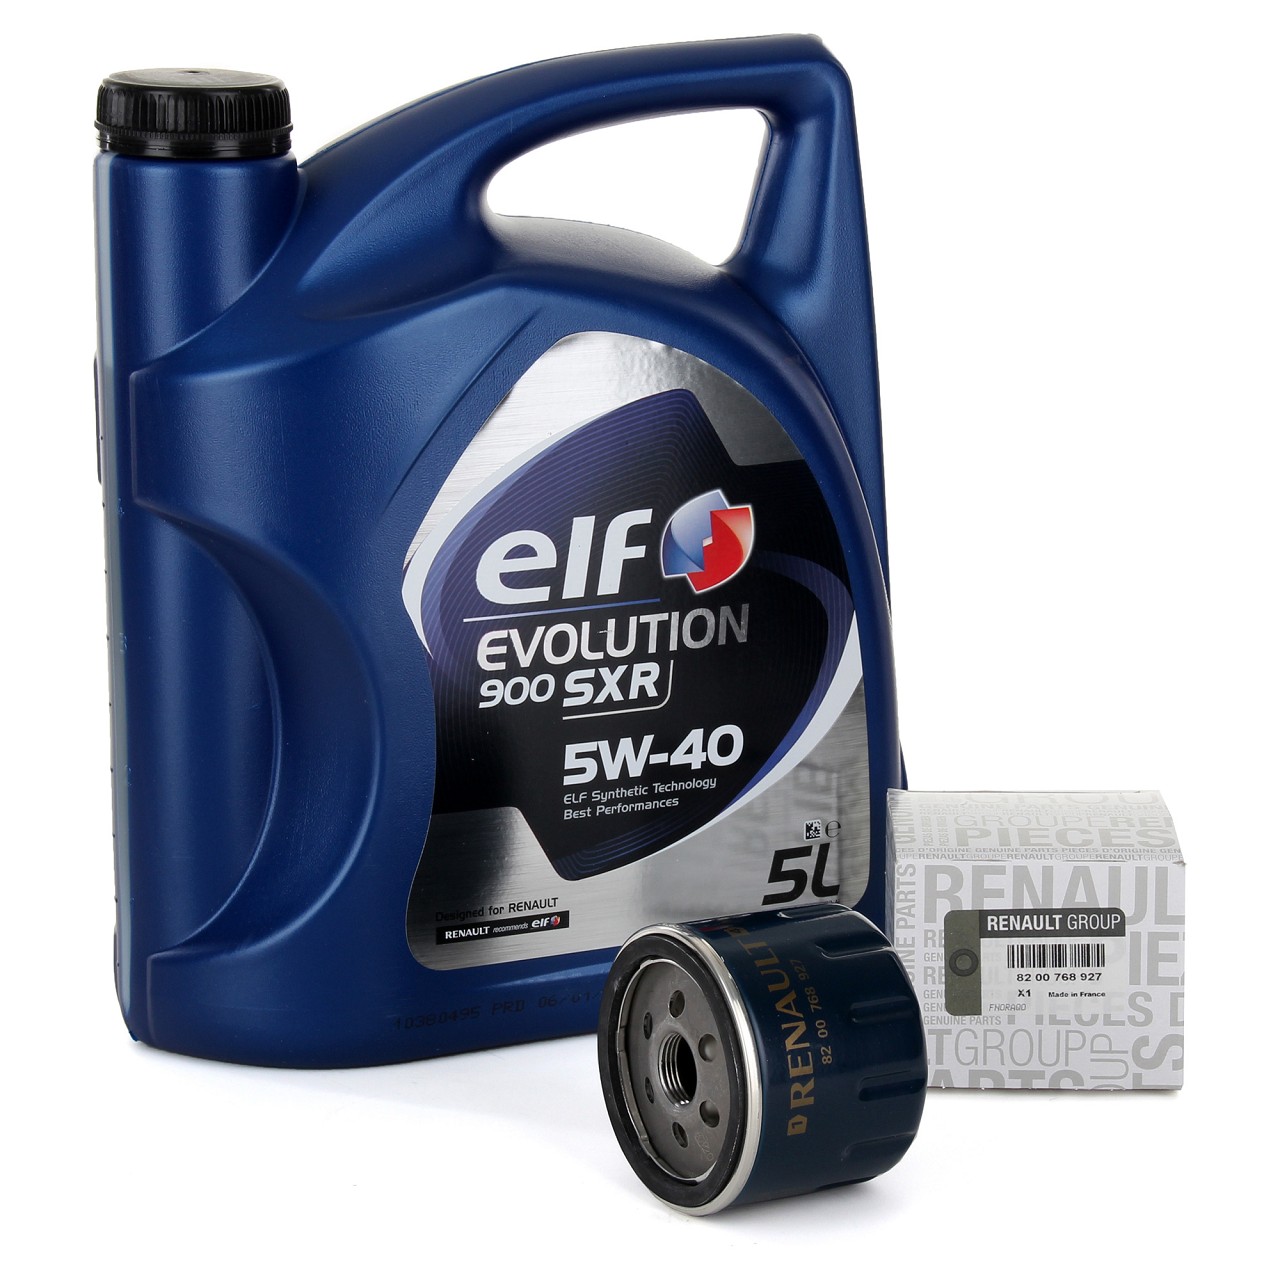 5L elf Evolution 900 SXR 5W-40 Motoröl + ORIGINAL Renault Ölfilter 8200768927